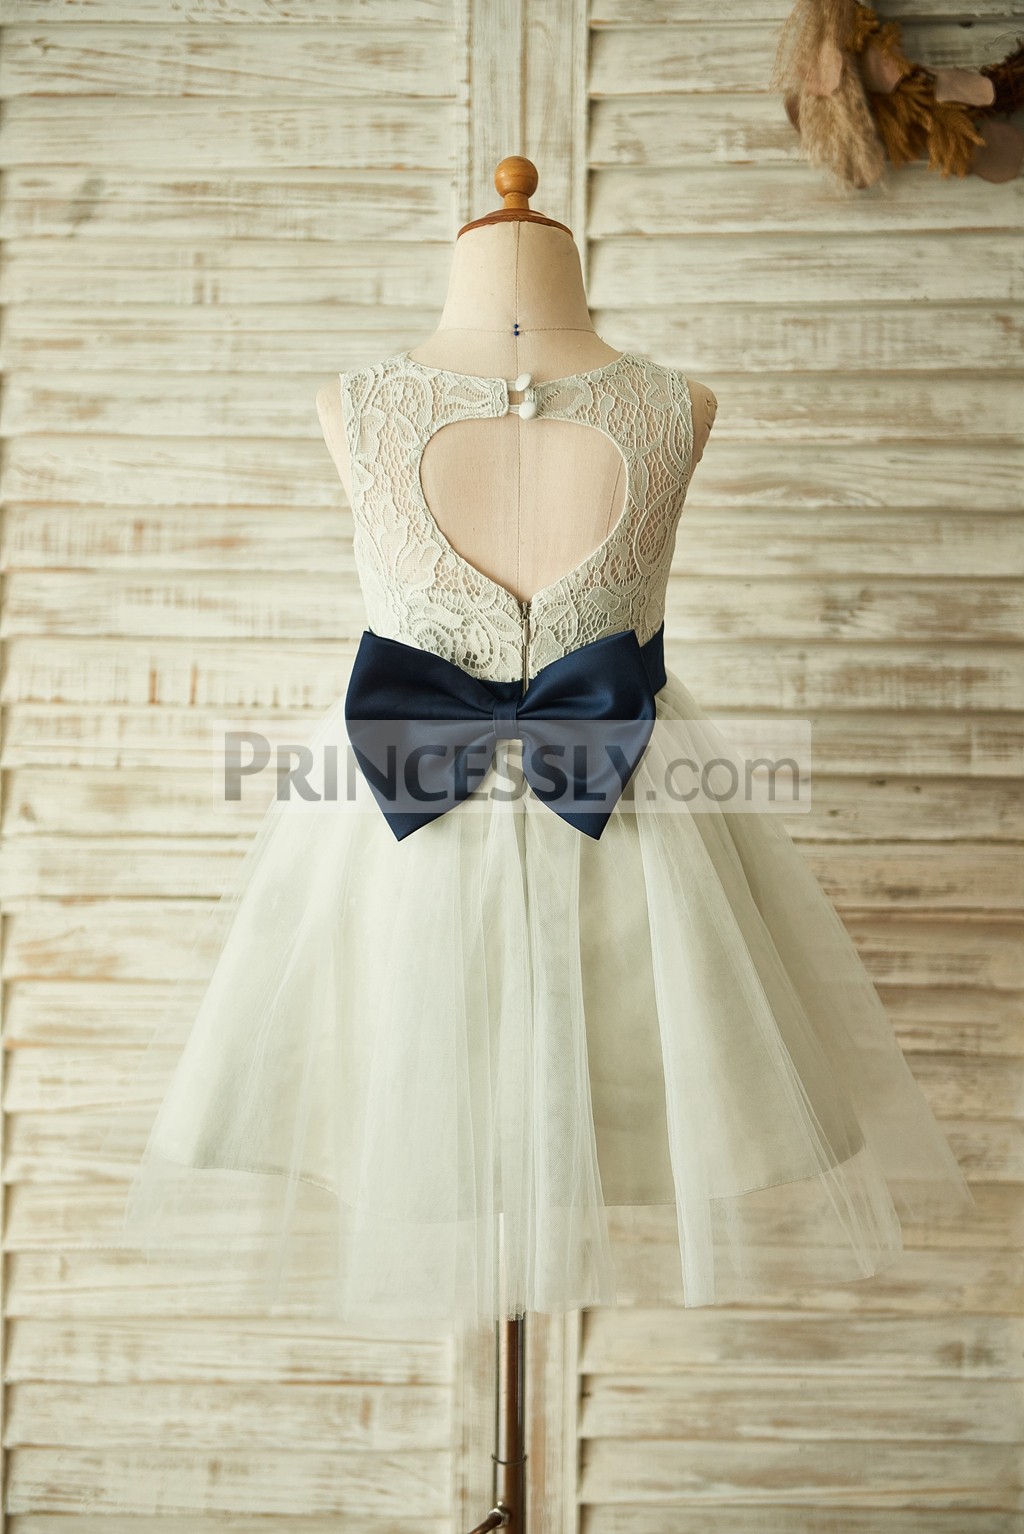 Princessly.com-K1003360 Keyhole Back Silver Gray Lace Tulle Wedding Flower Girl Dress with Bow Belt-31